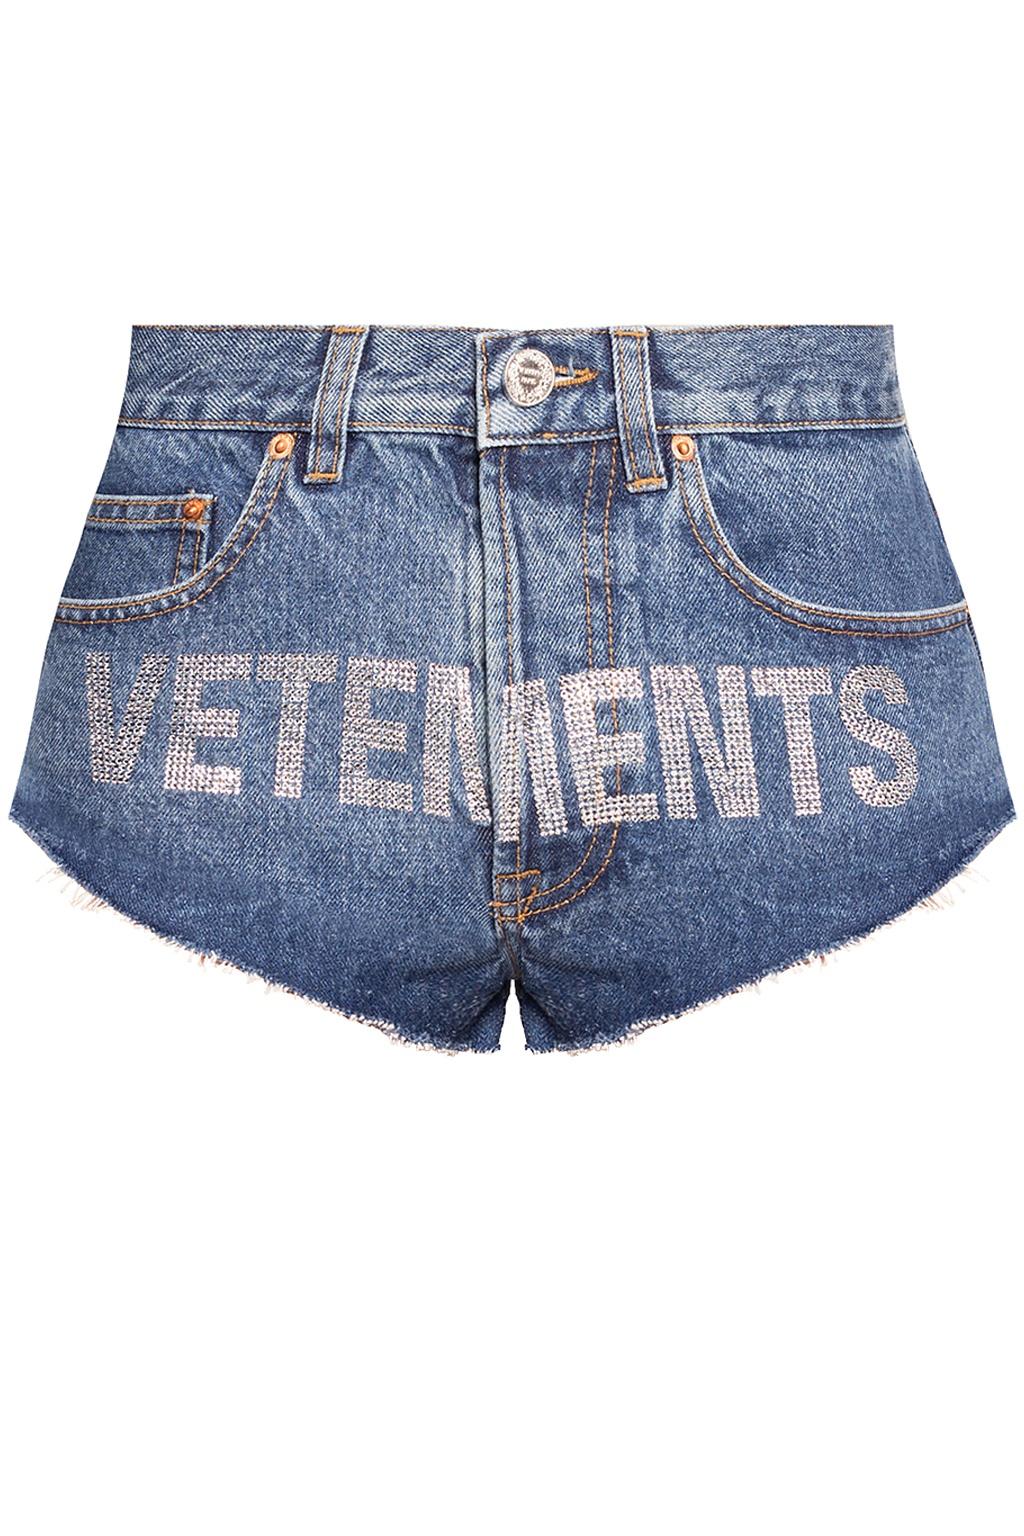 Vetements Denim Shorts With Logo in Blue | Lyst